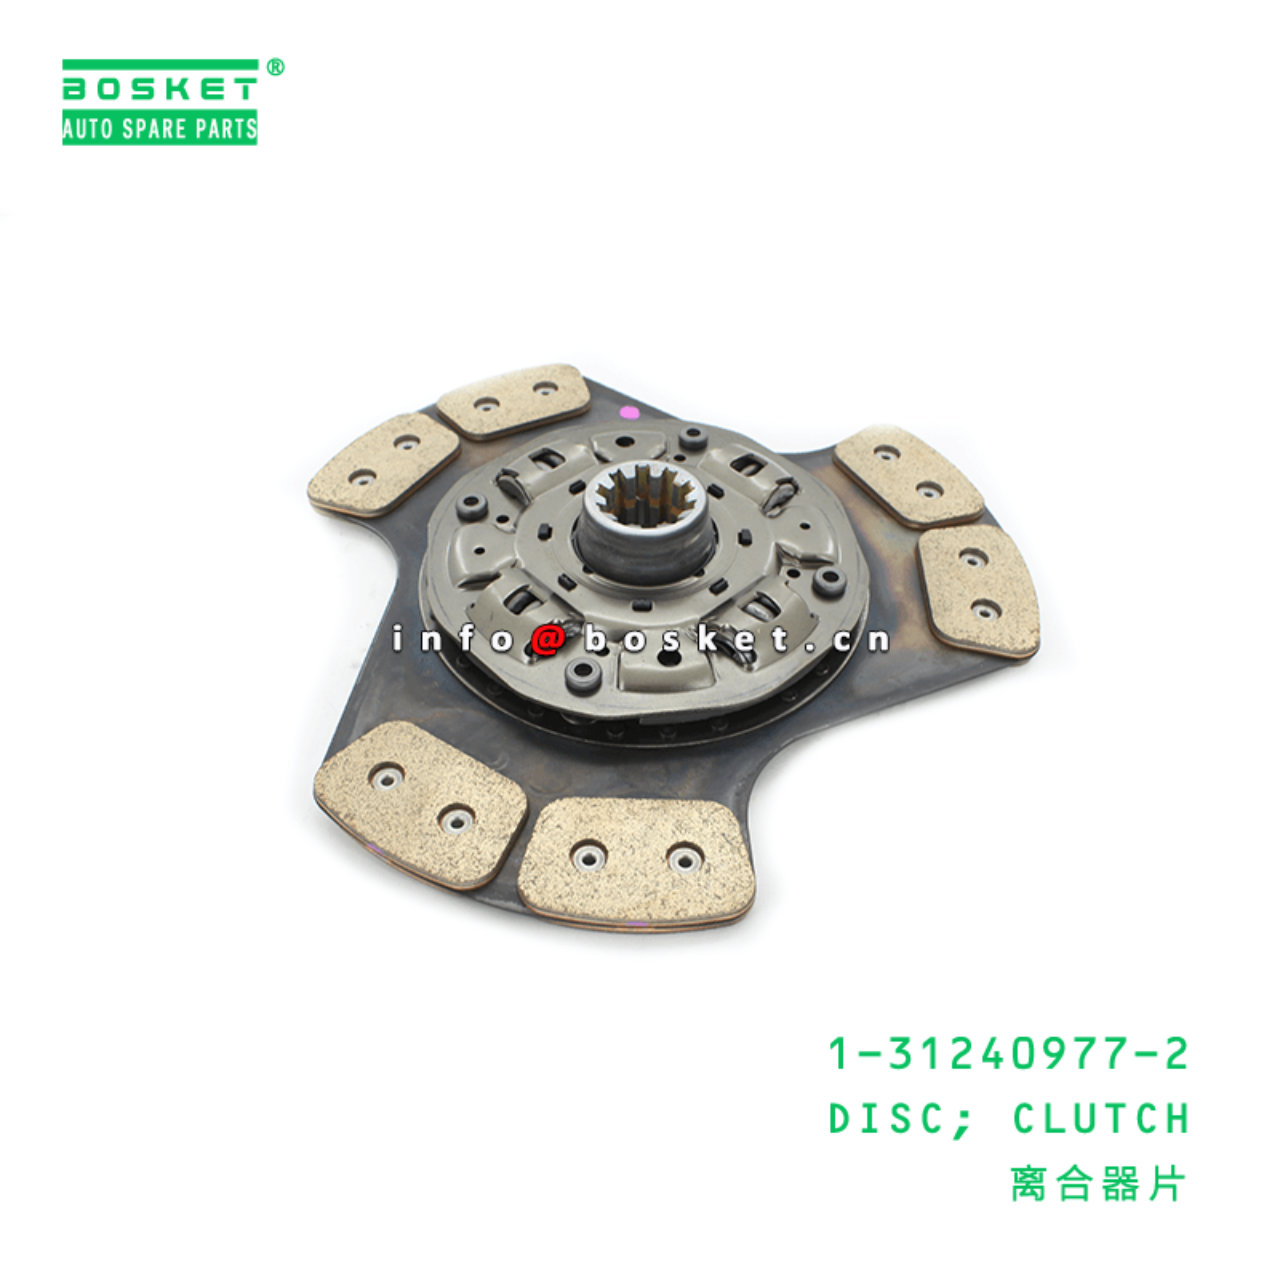 1-31240977-2 Clutch Disc Suitable for ISUZU FVR 1312409772